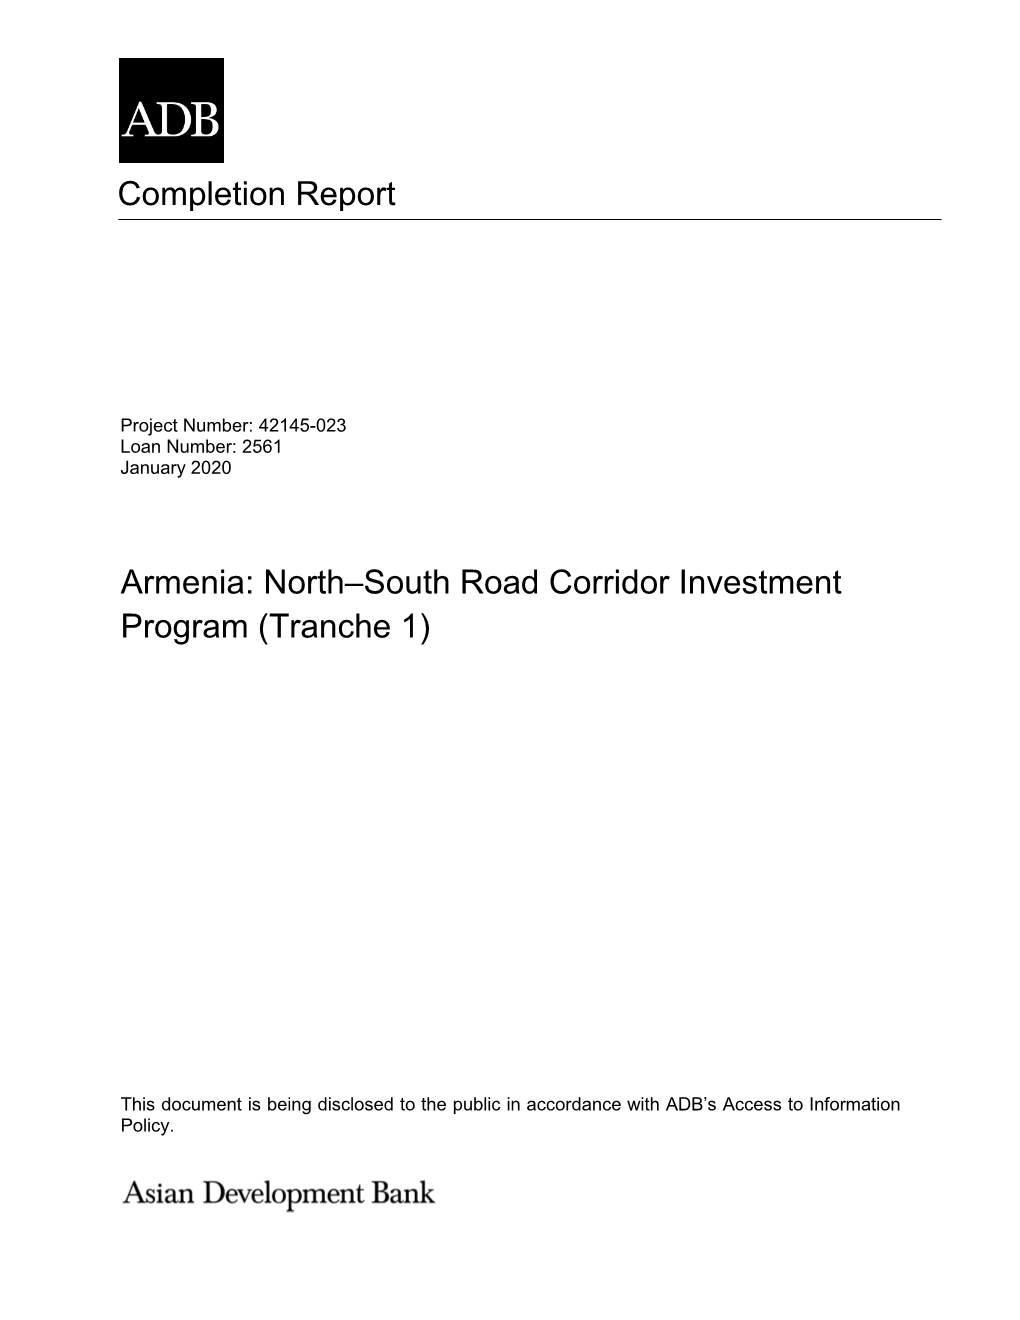 North-South Road Corridor Investment Program – Tranche 1: Project